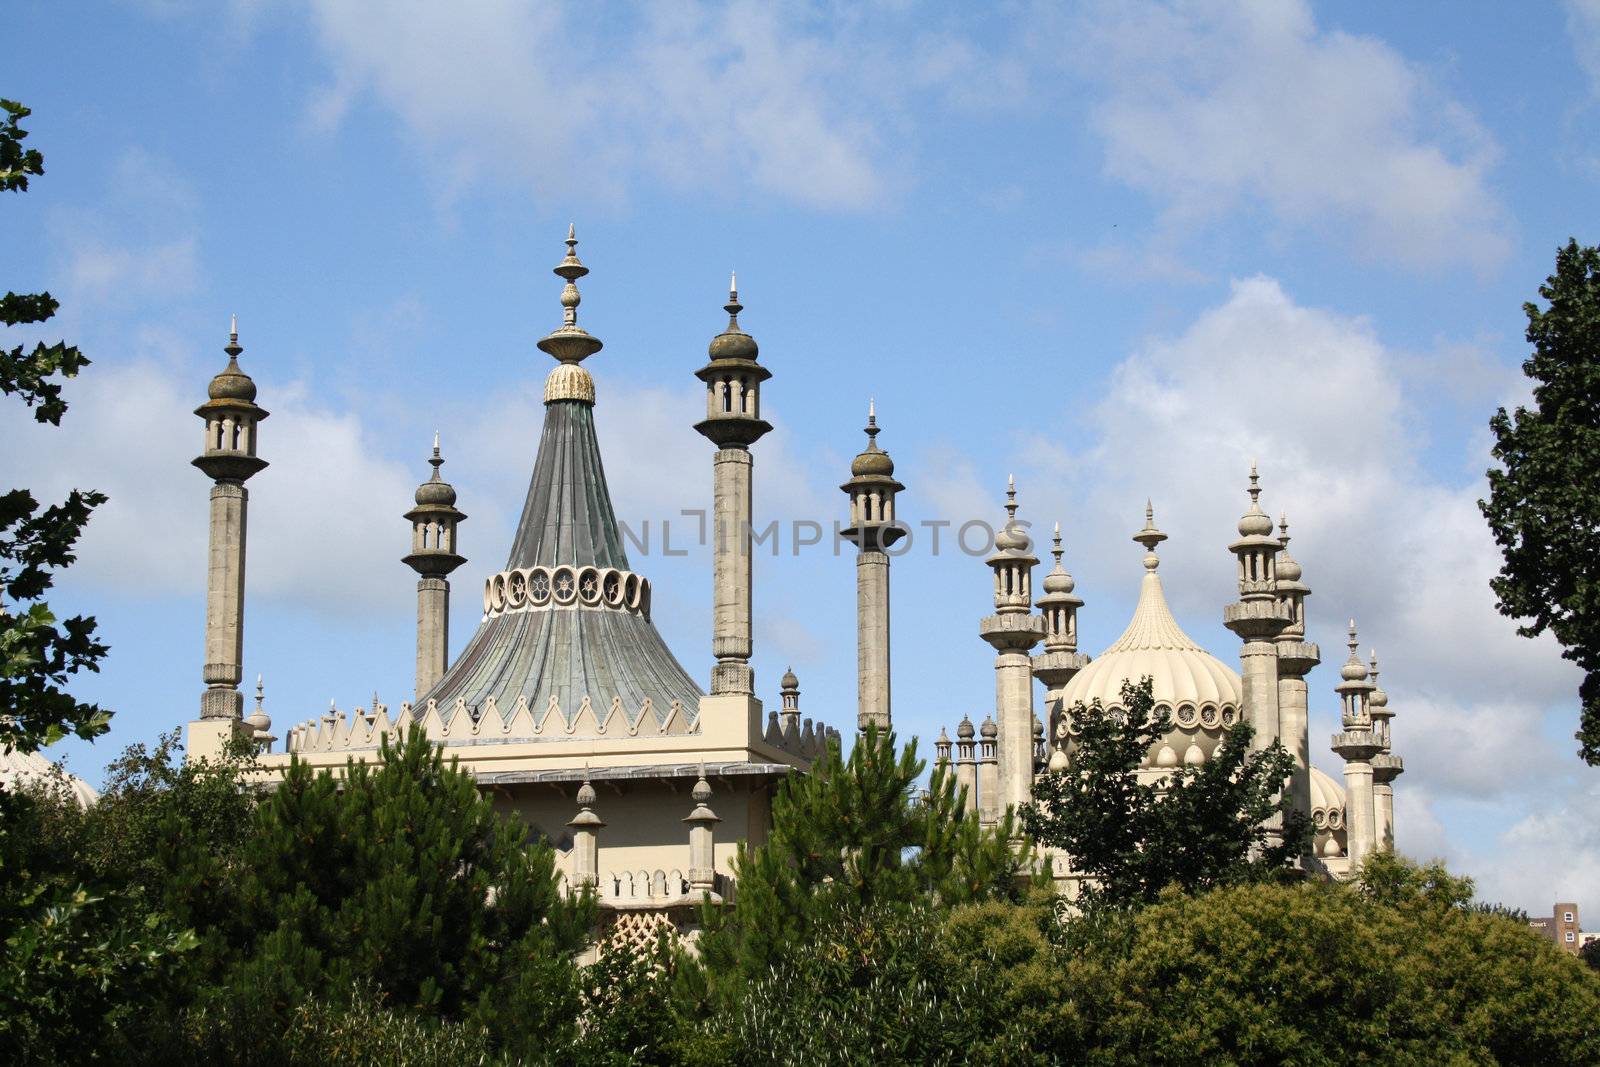 View of the Royal Pavillion of Brighton